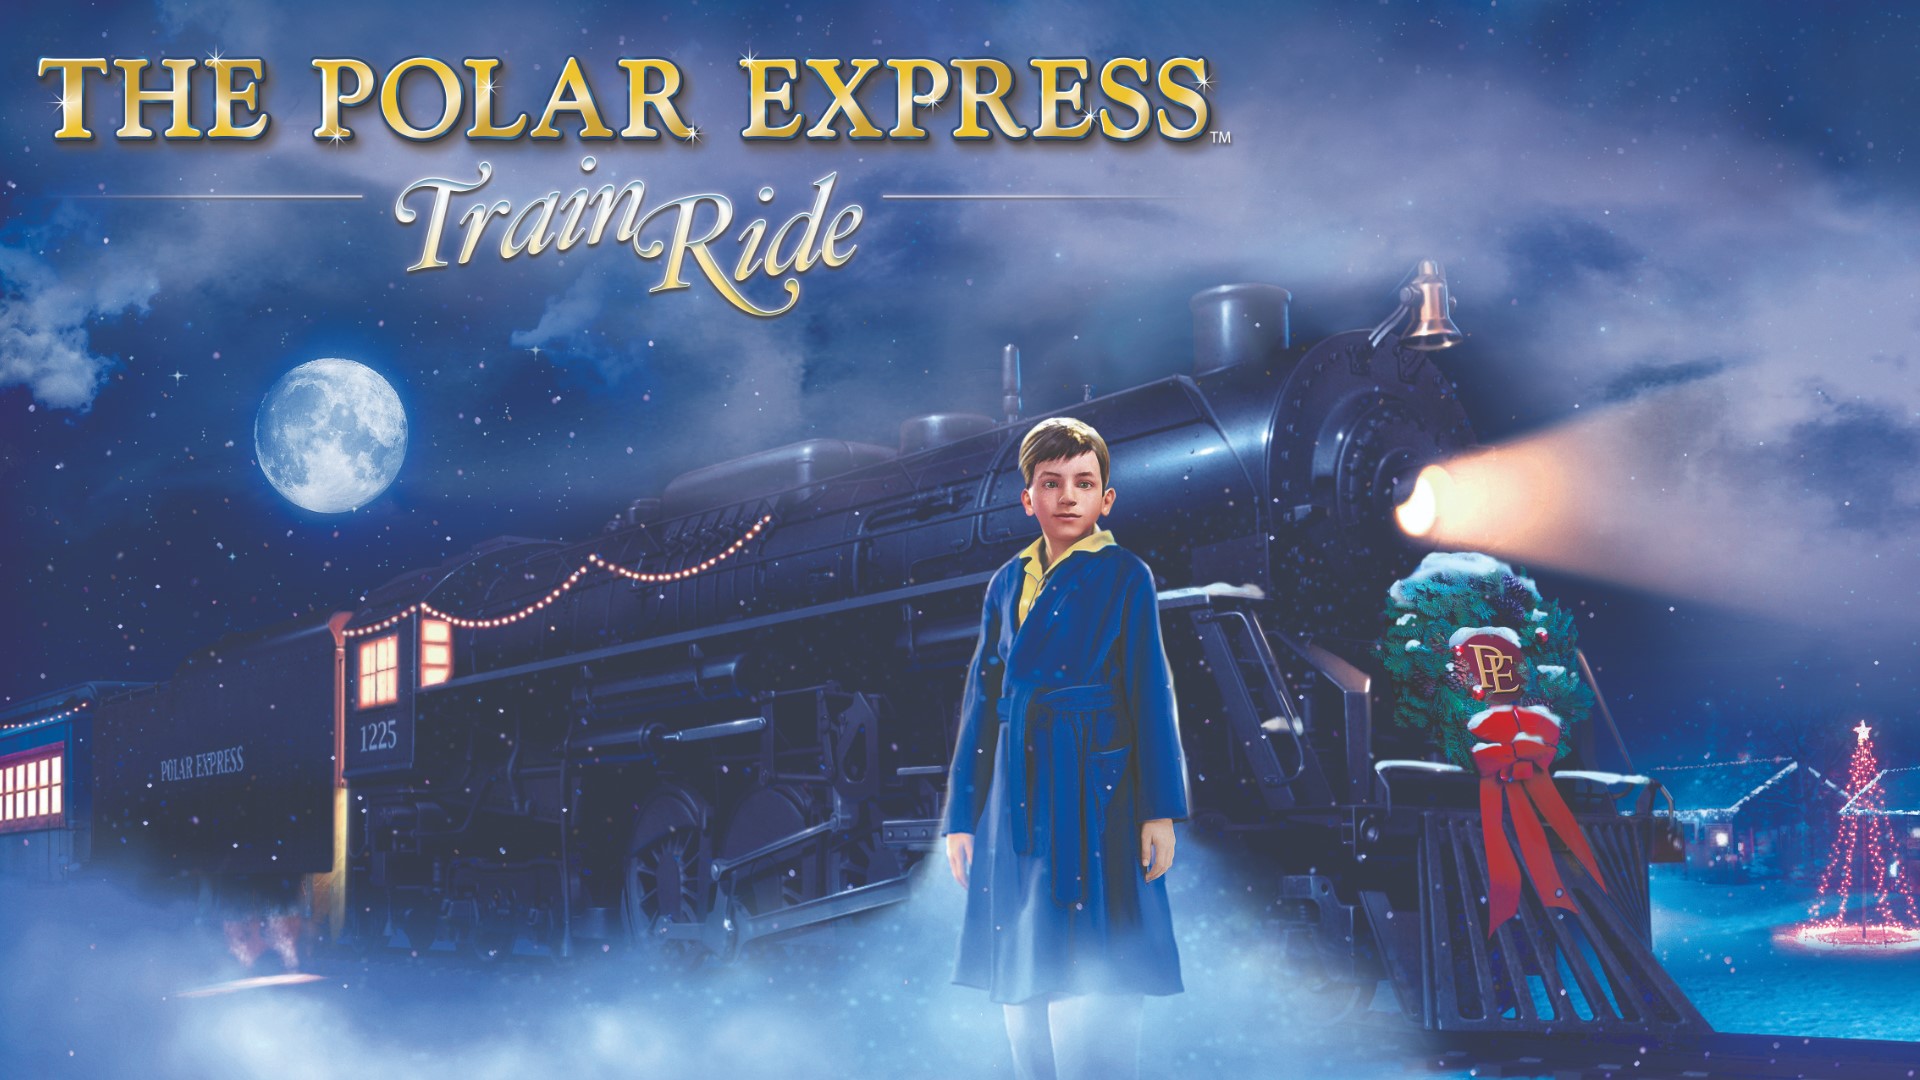 Polar Express Train Ride is back at Colorado Railroad Museum